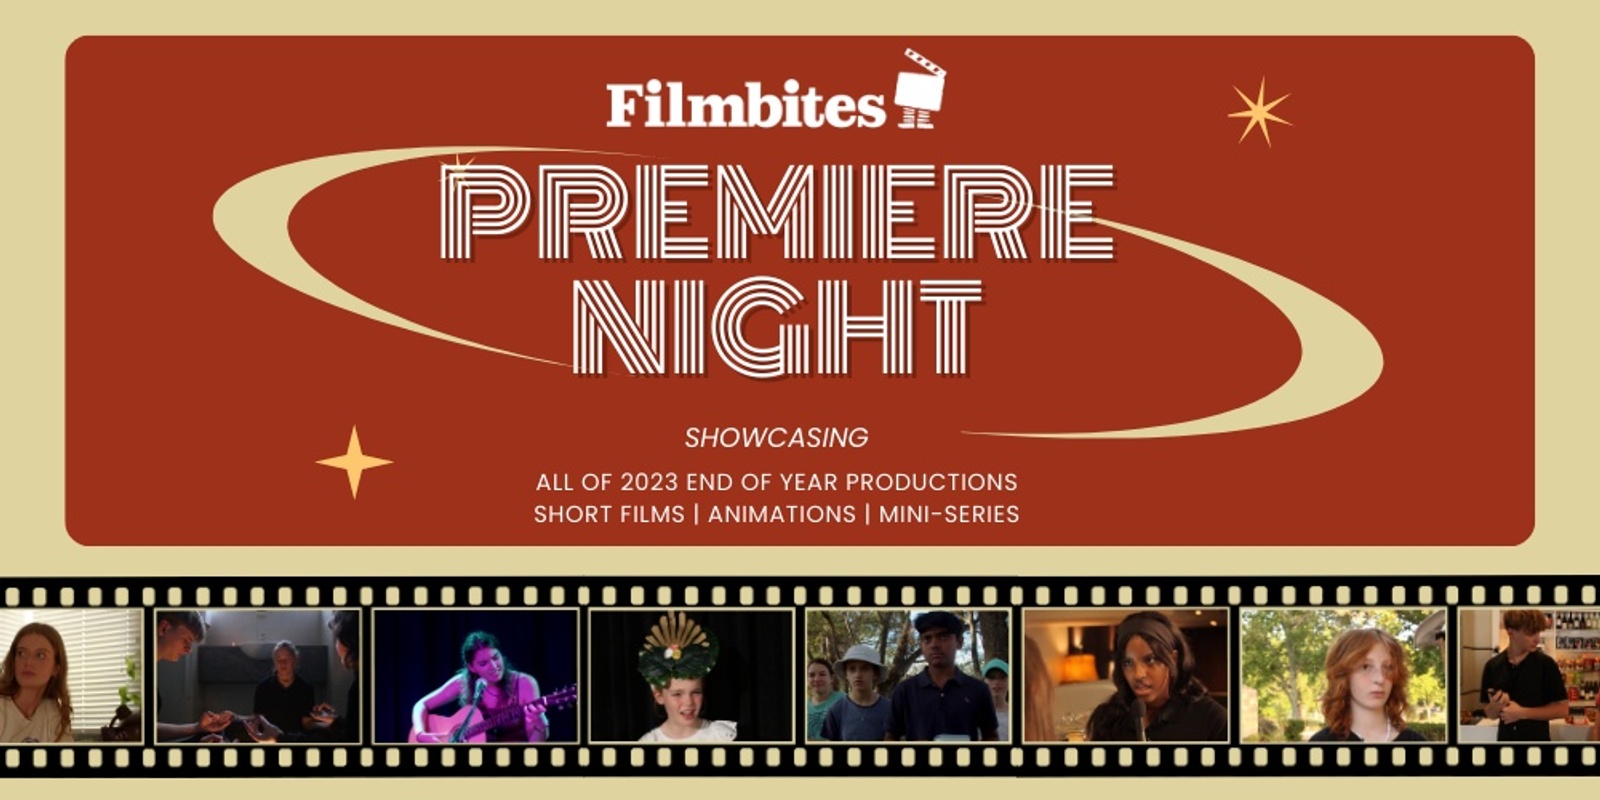 Banner image for Filmbites Premiere Night - 2023 Showcase Films